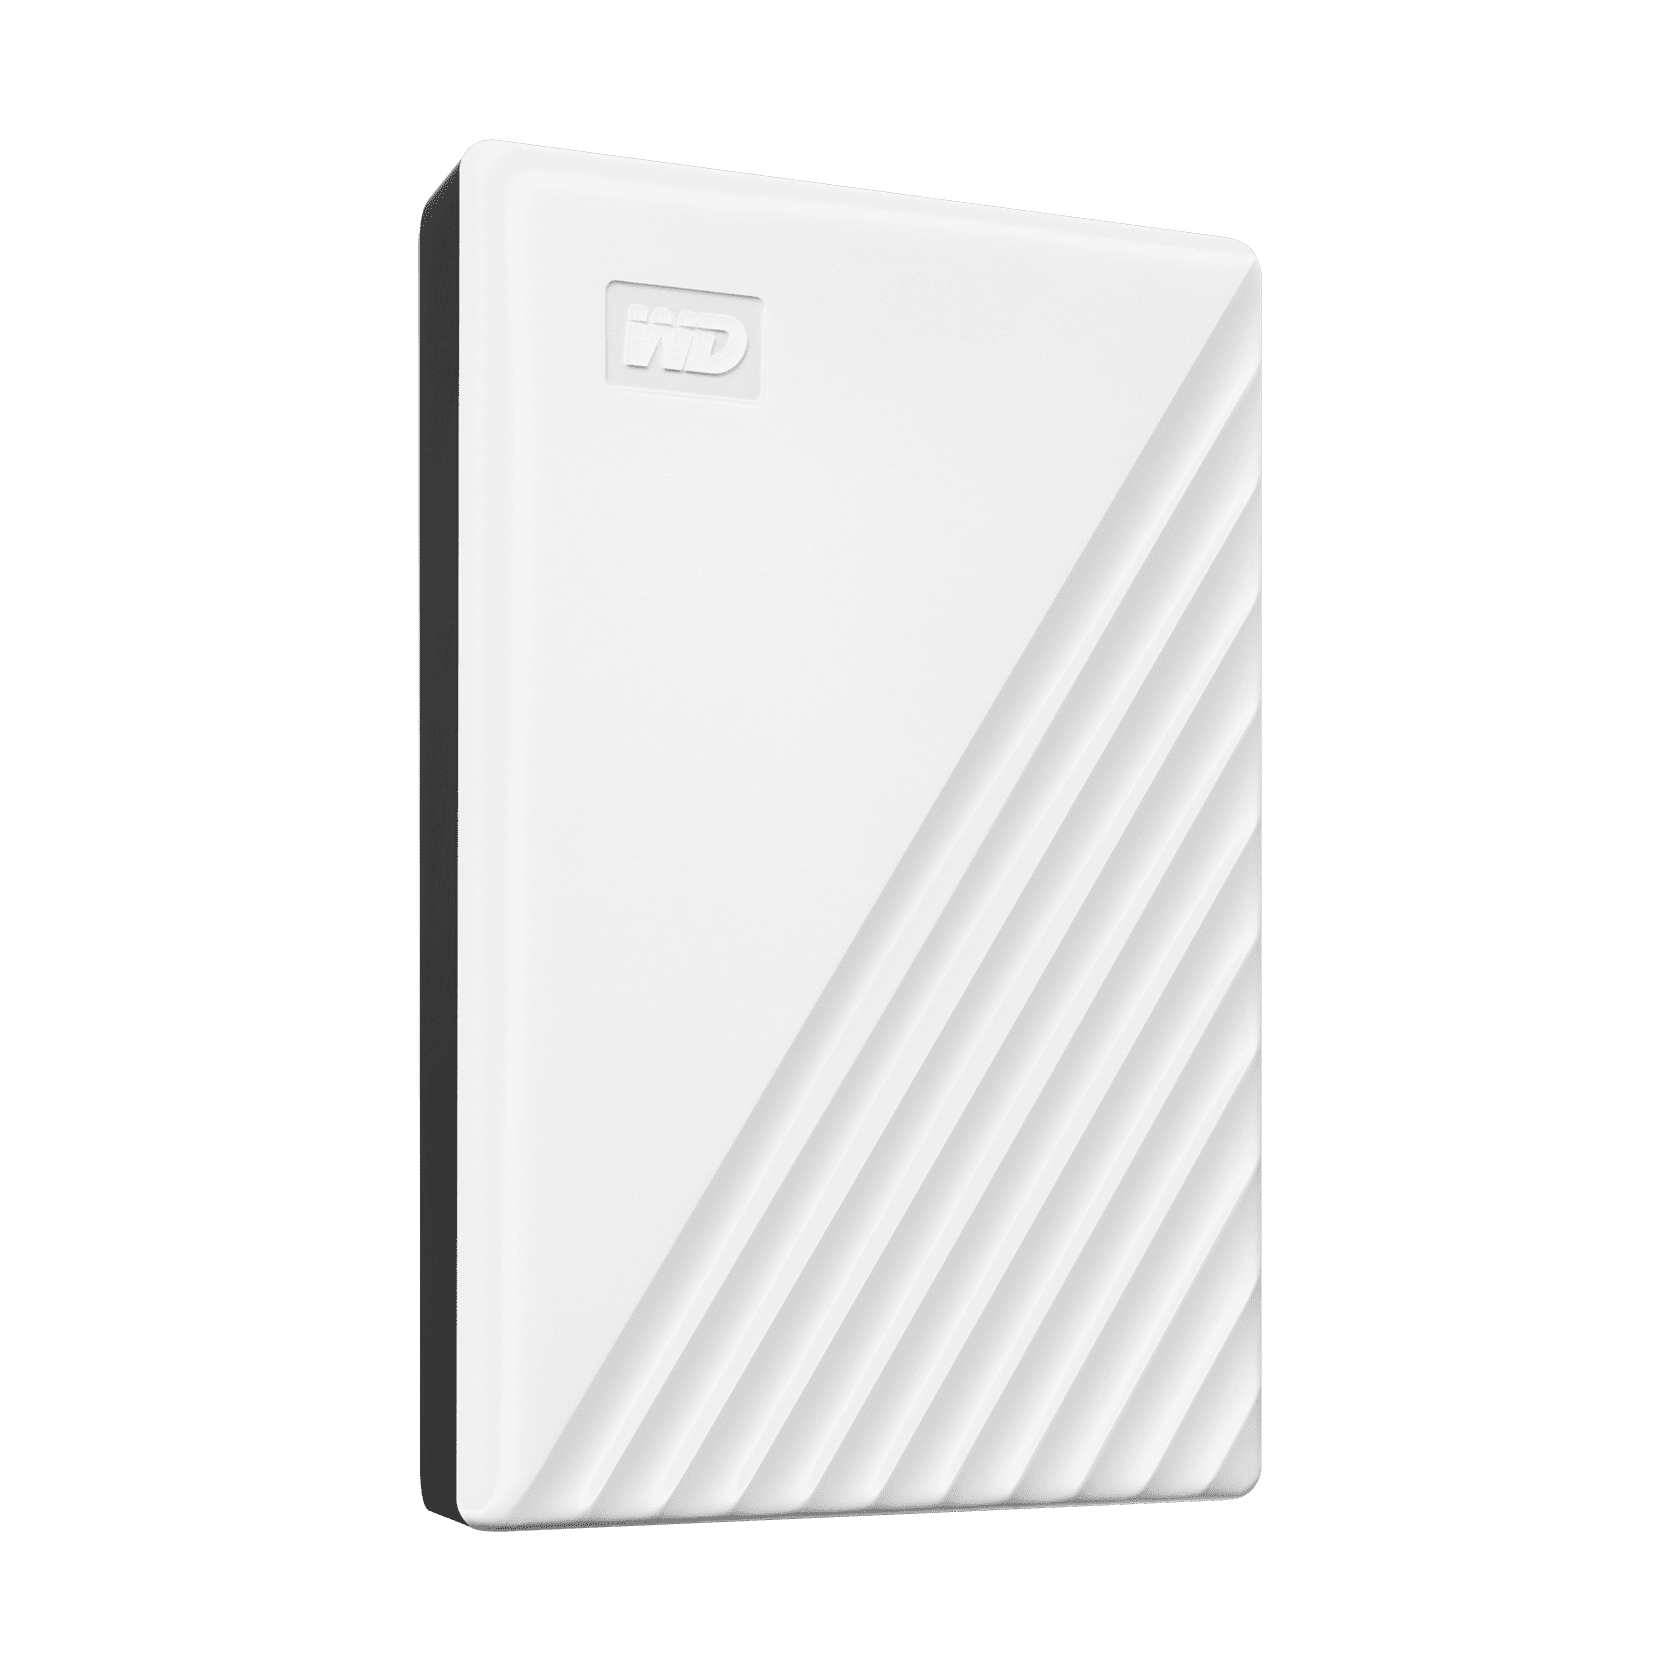 My Portable - Hard White 2TB WDBYVG0020BWT-WESN Drive, External Passport, WD